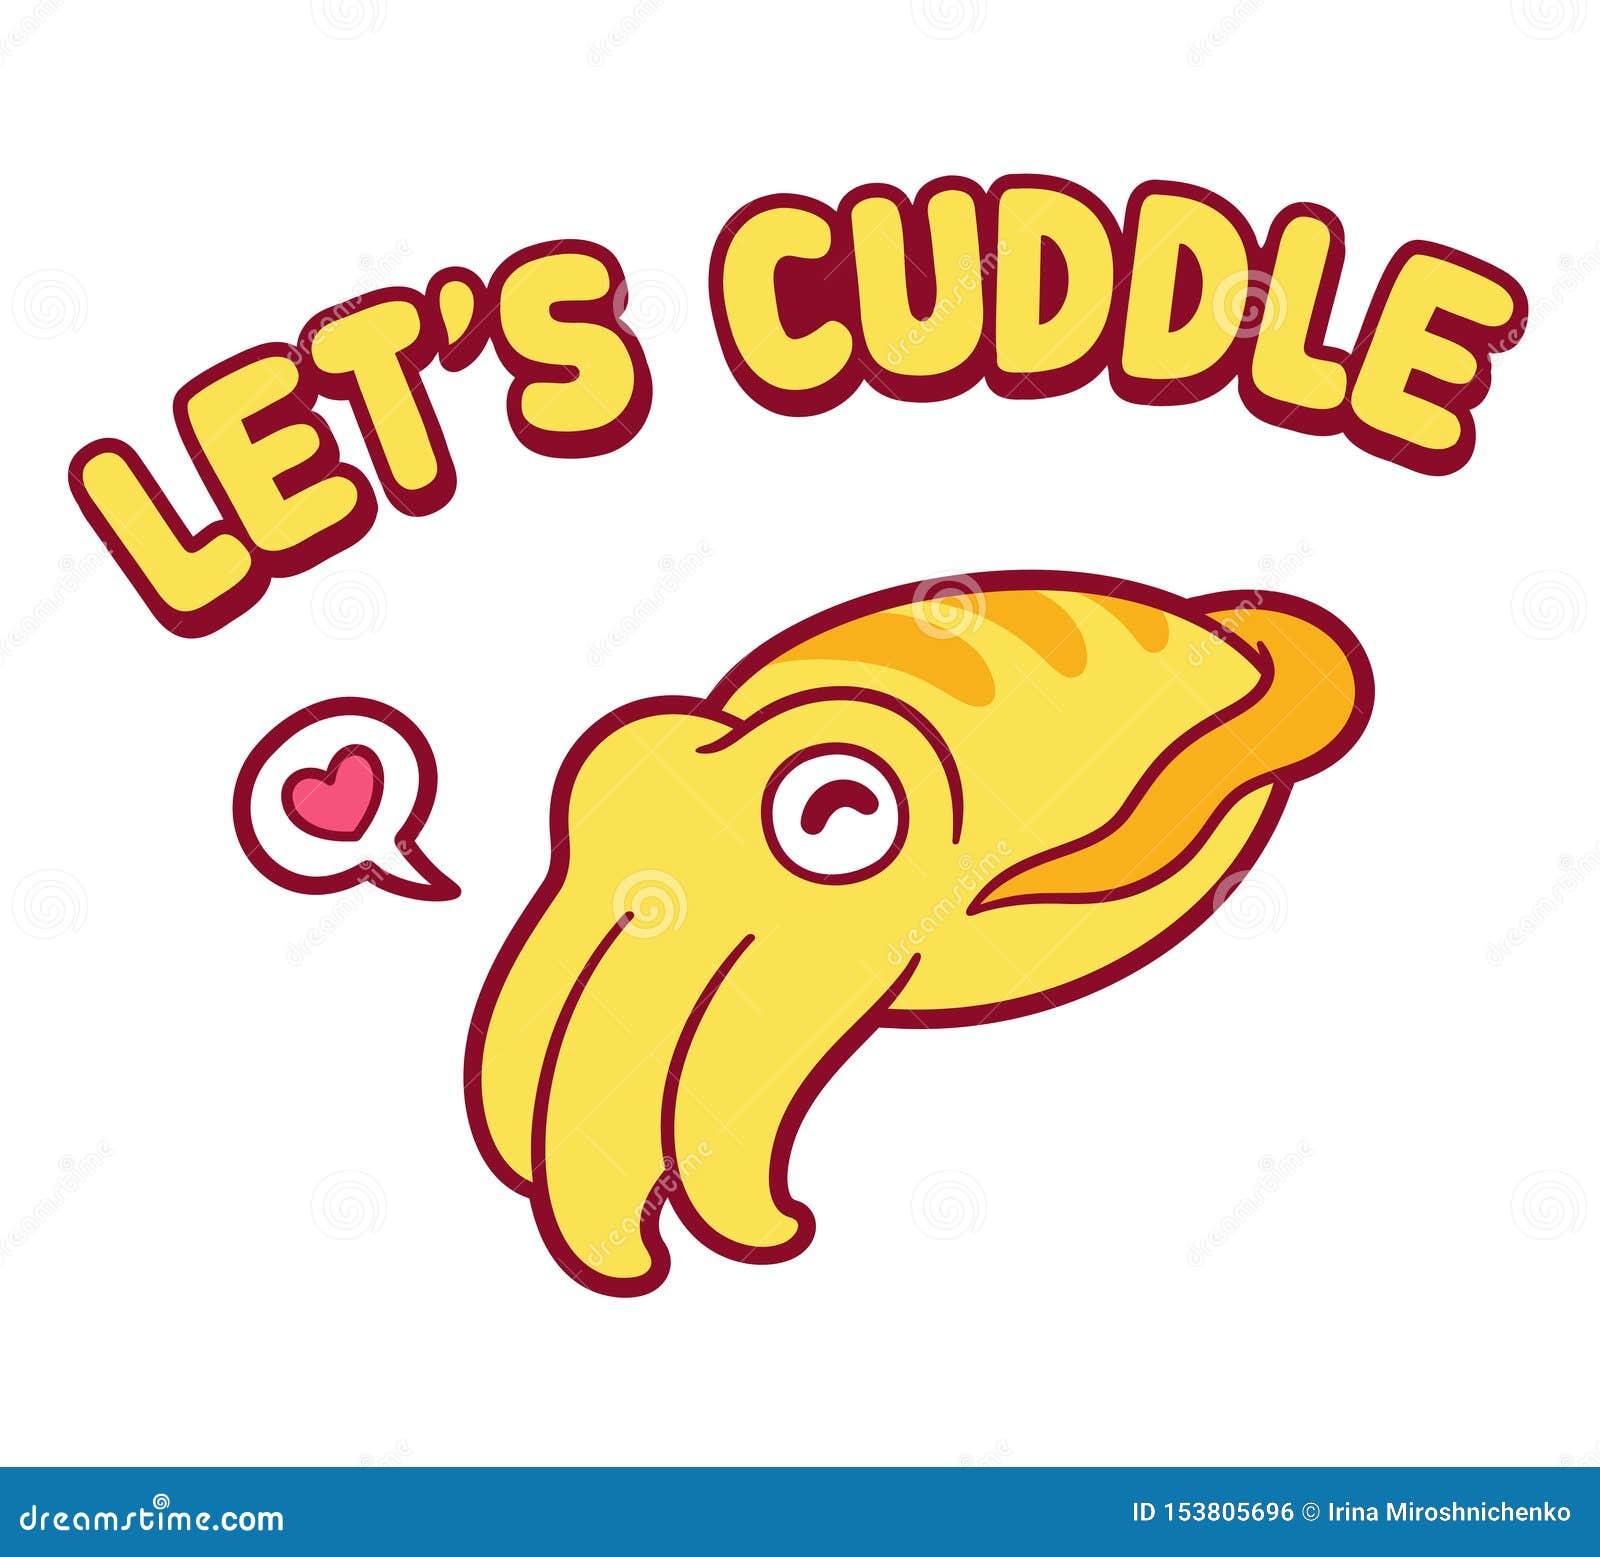 lett`s cuddle cartoon cuttlefish